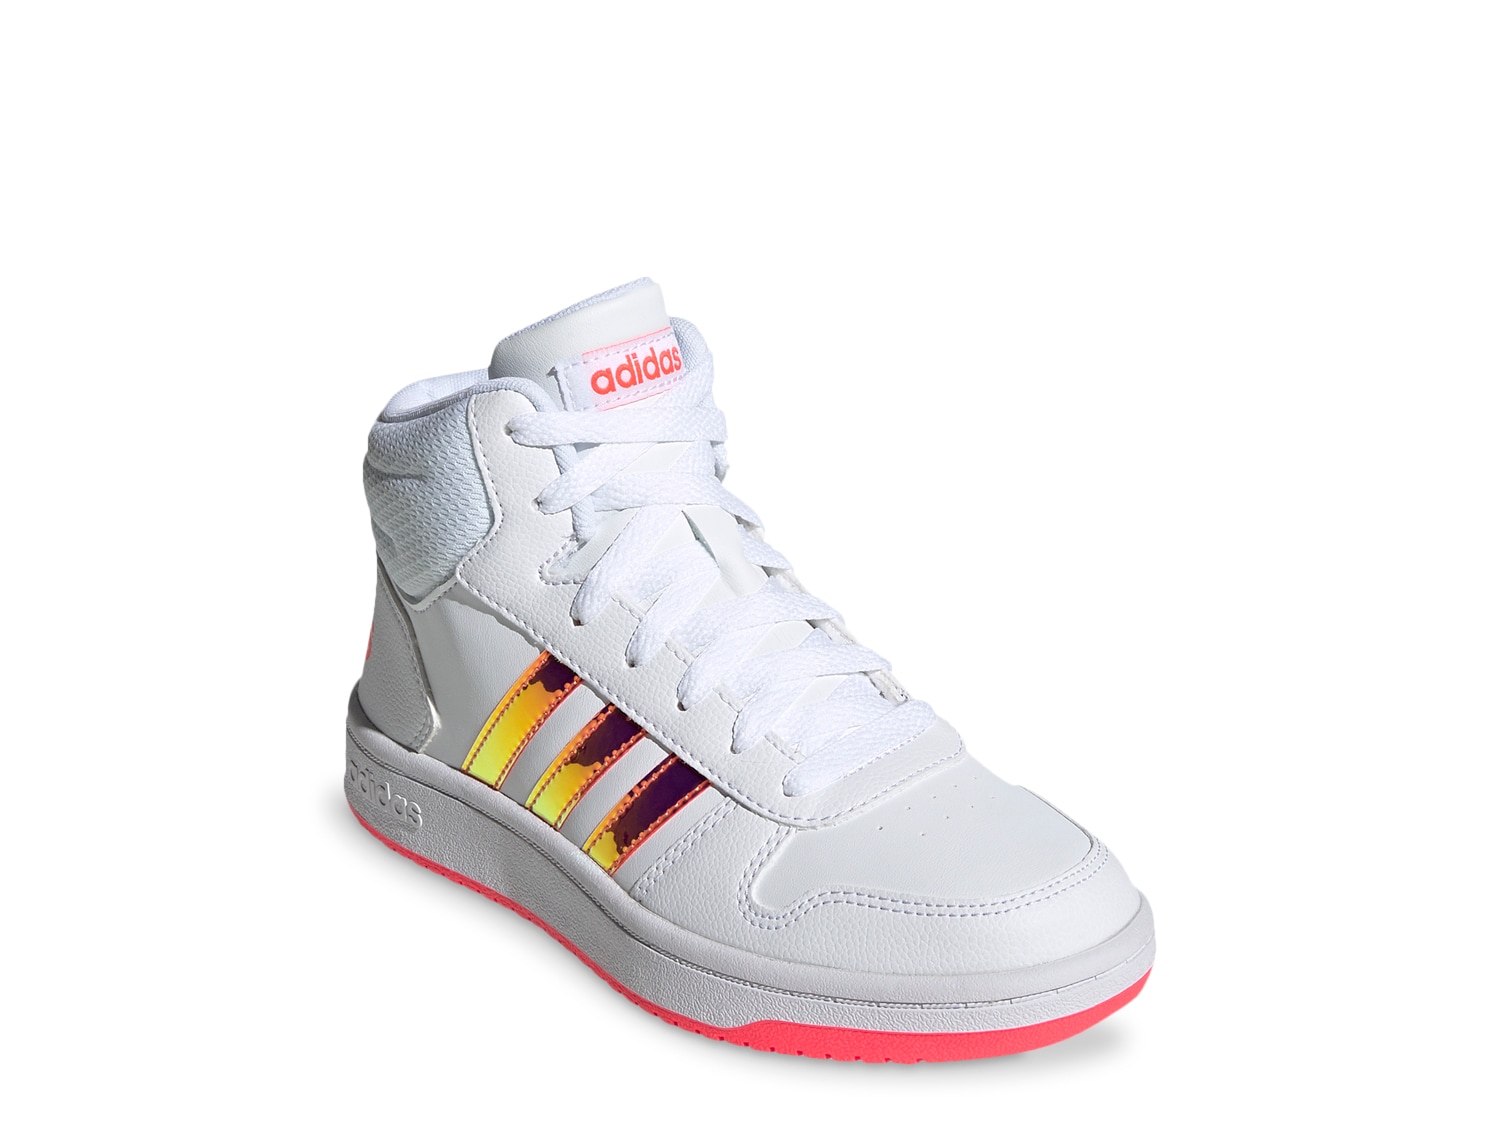 adidas hoops 2.0 mid basketball shoes